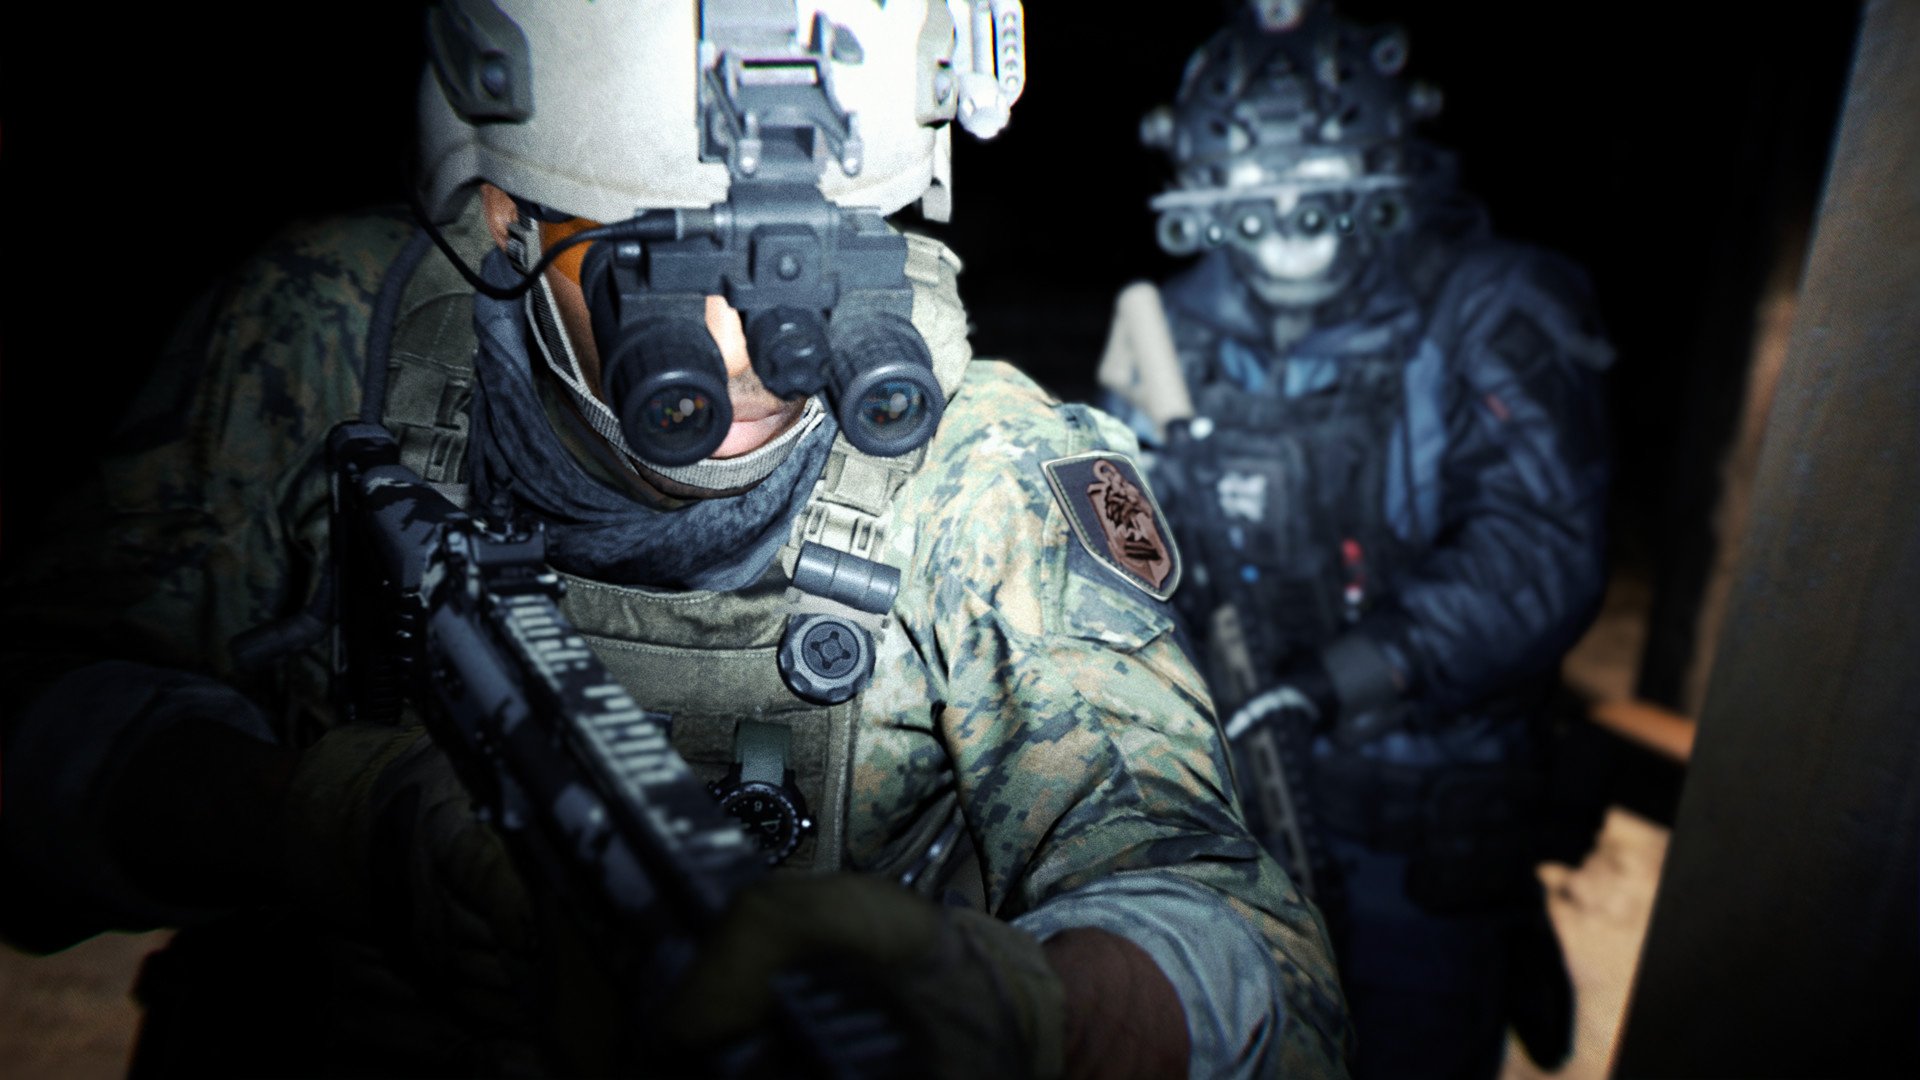 Call of Duty: Modern Warfare 2 review